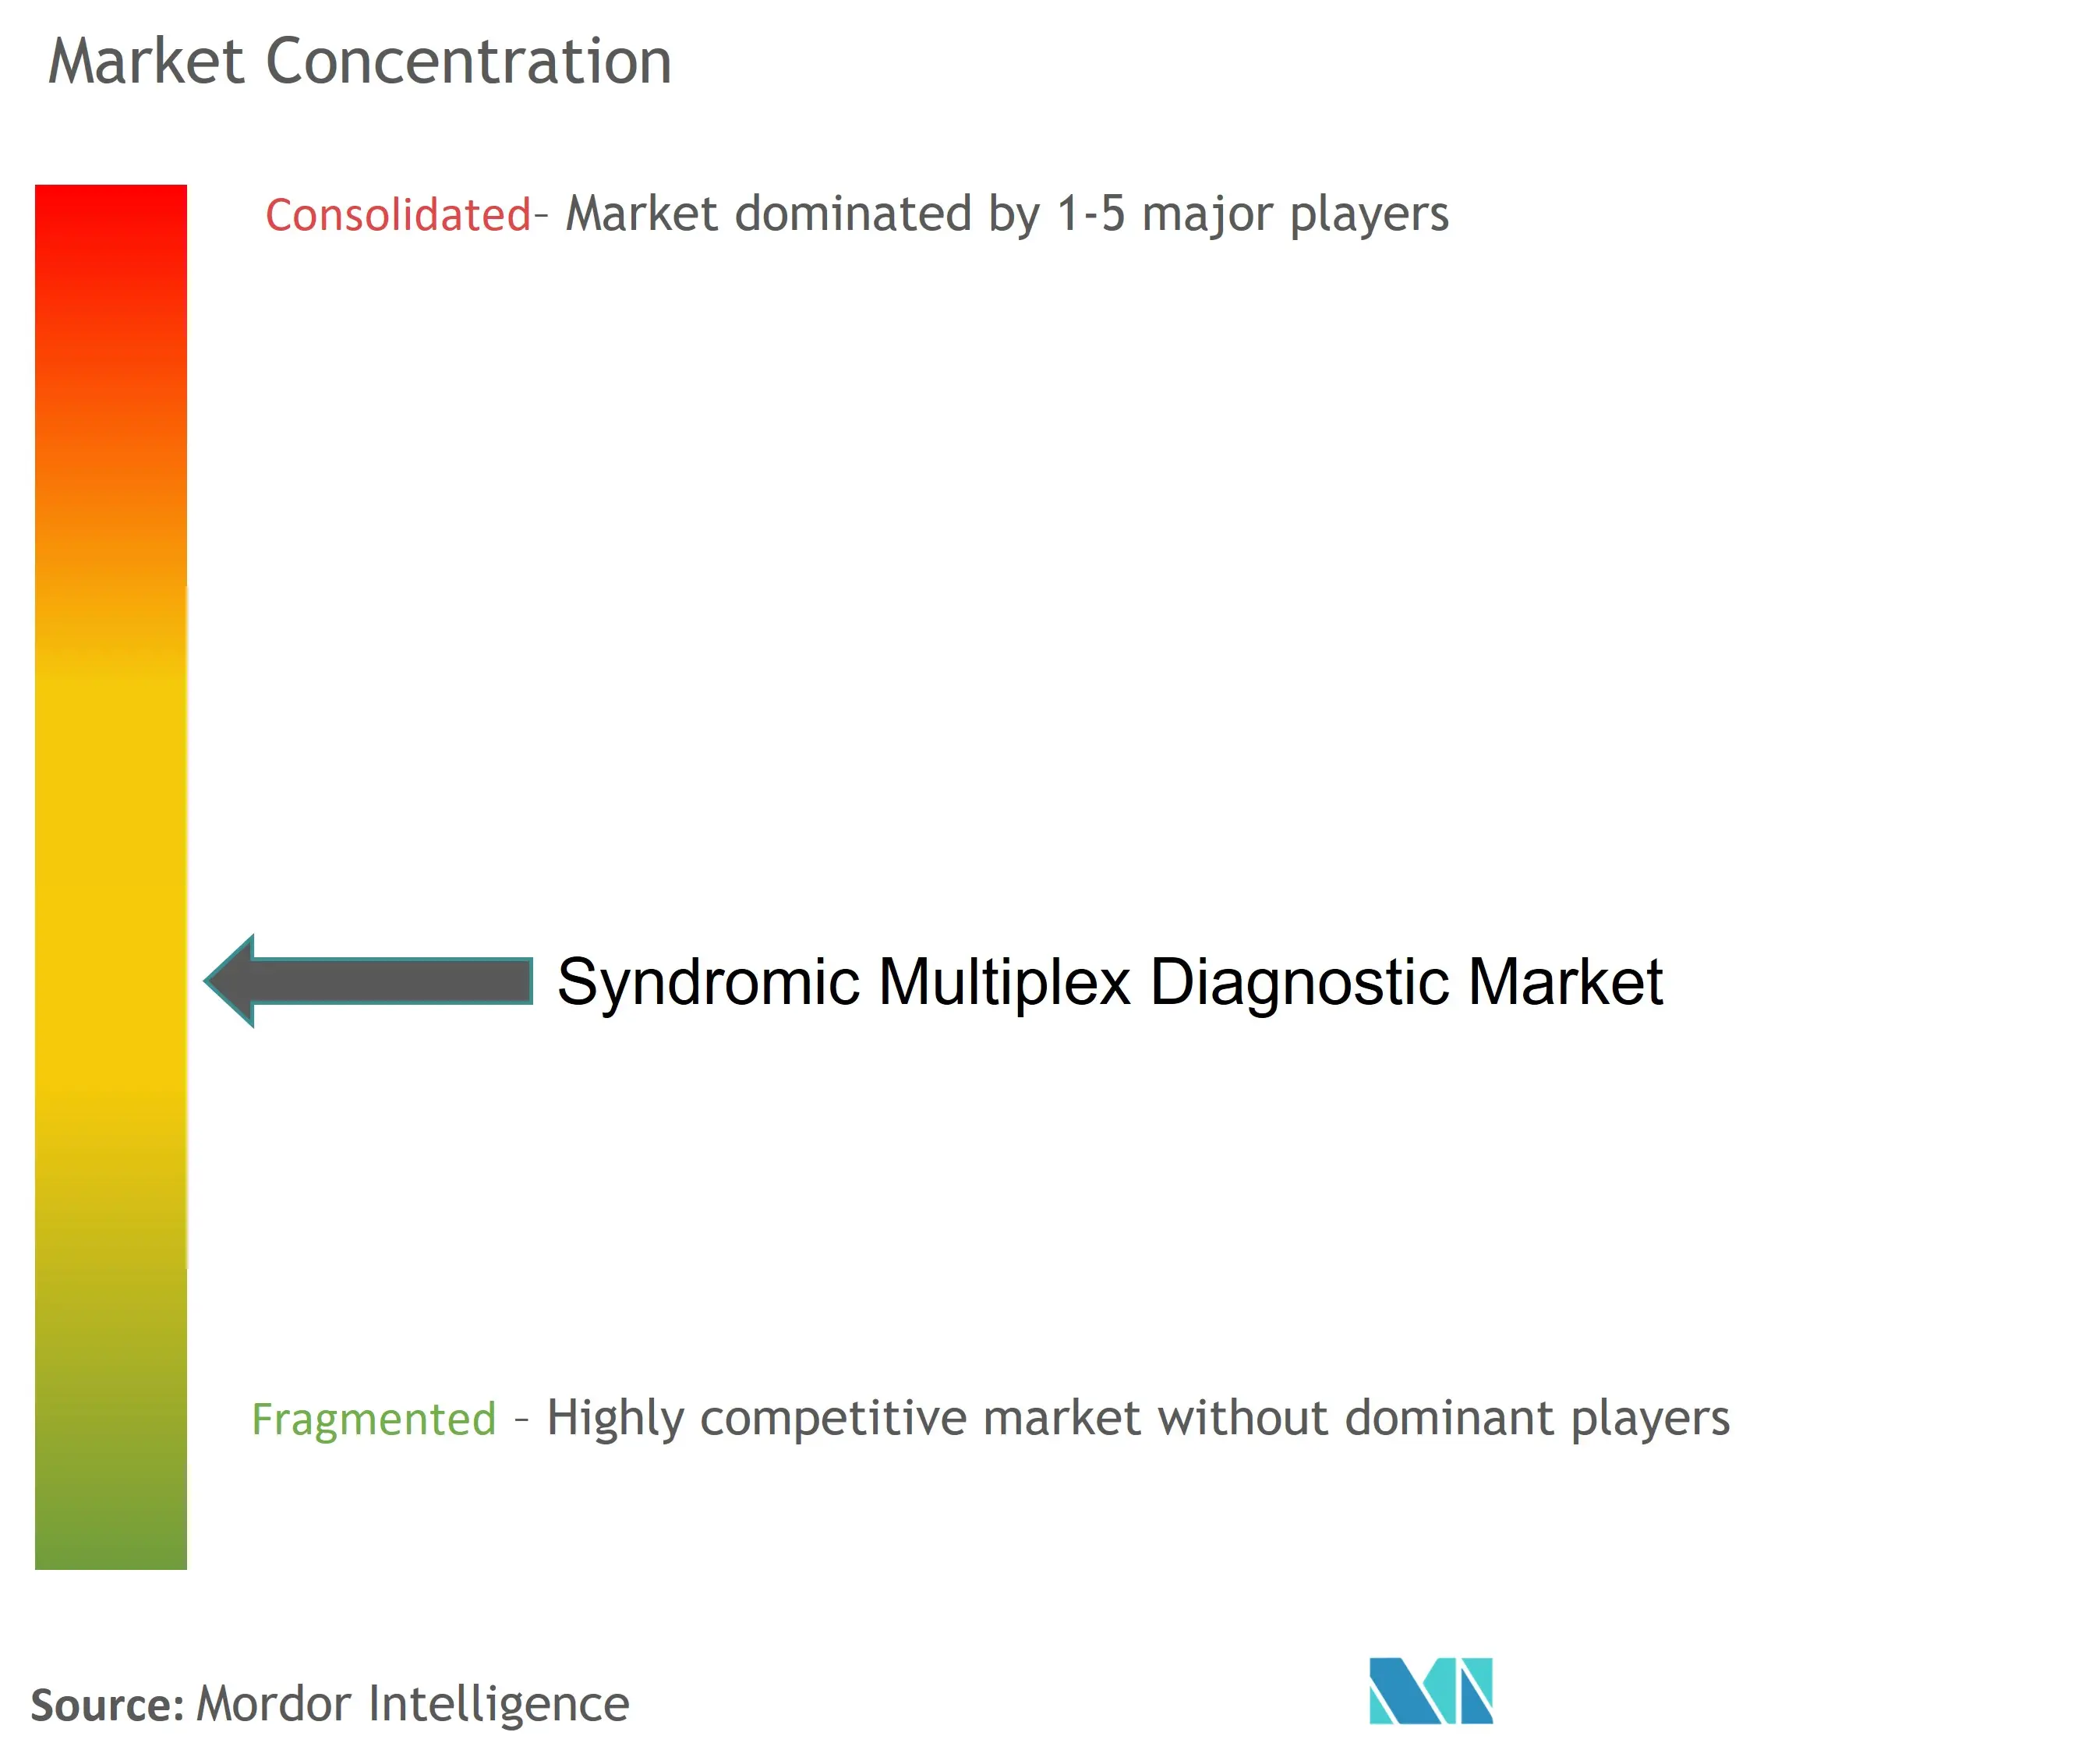 Syndromic Multiplex Diagnostic Market Concentration